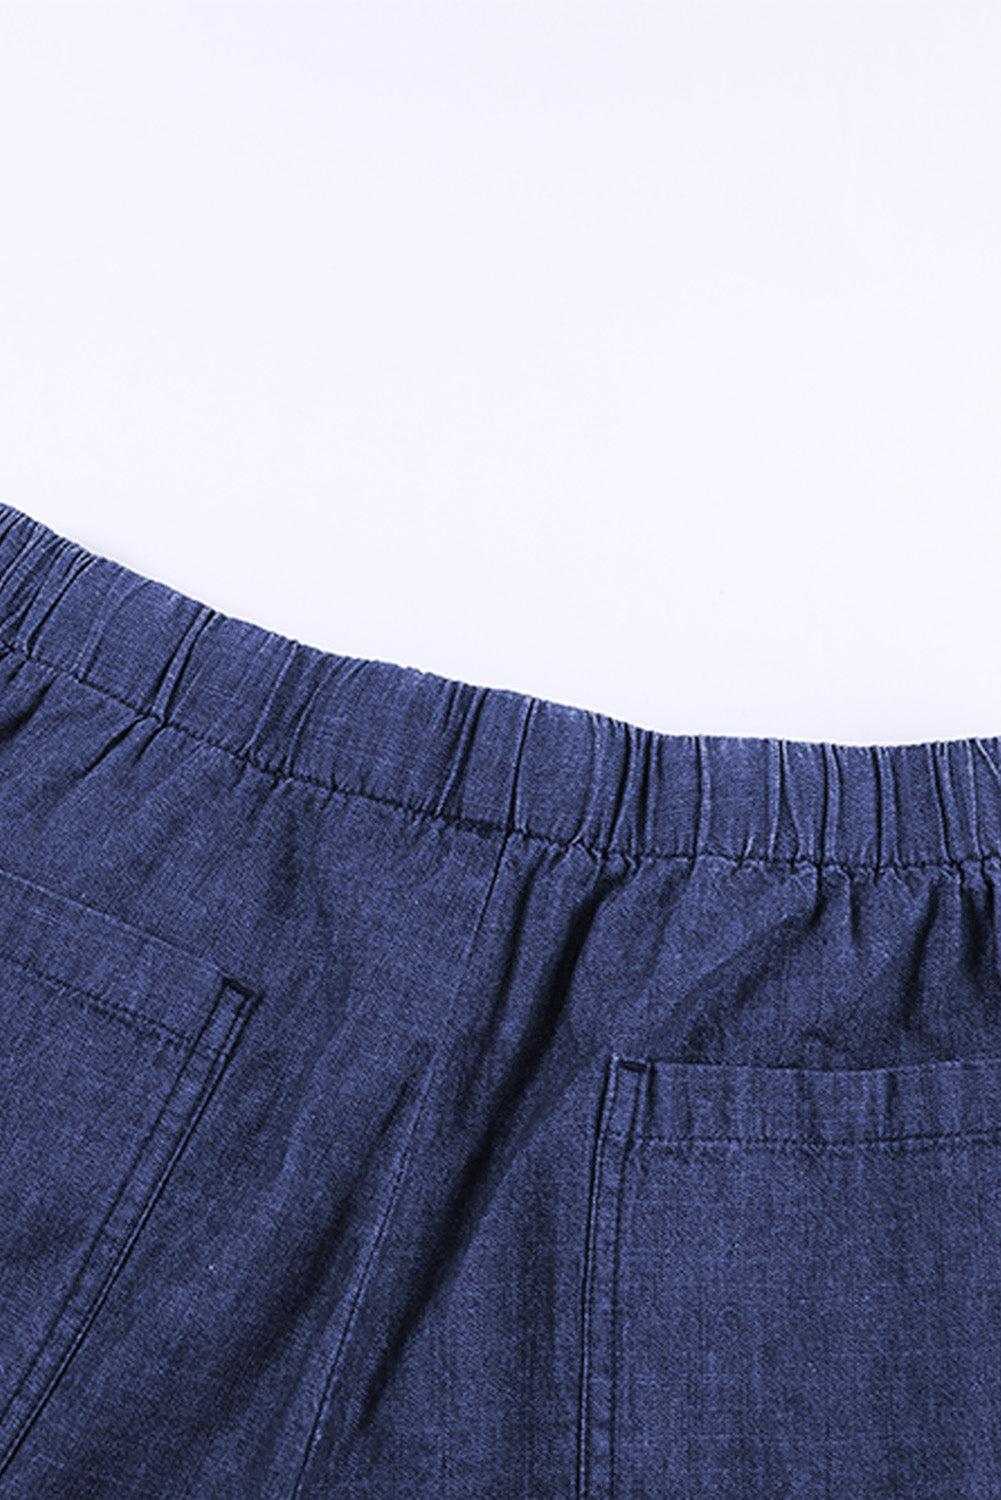 Light Blue Casual Frayed Pocketed Denim Shorts - Vesteeto